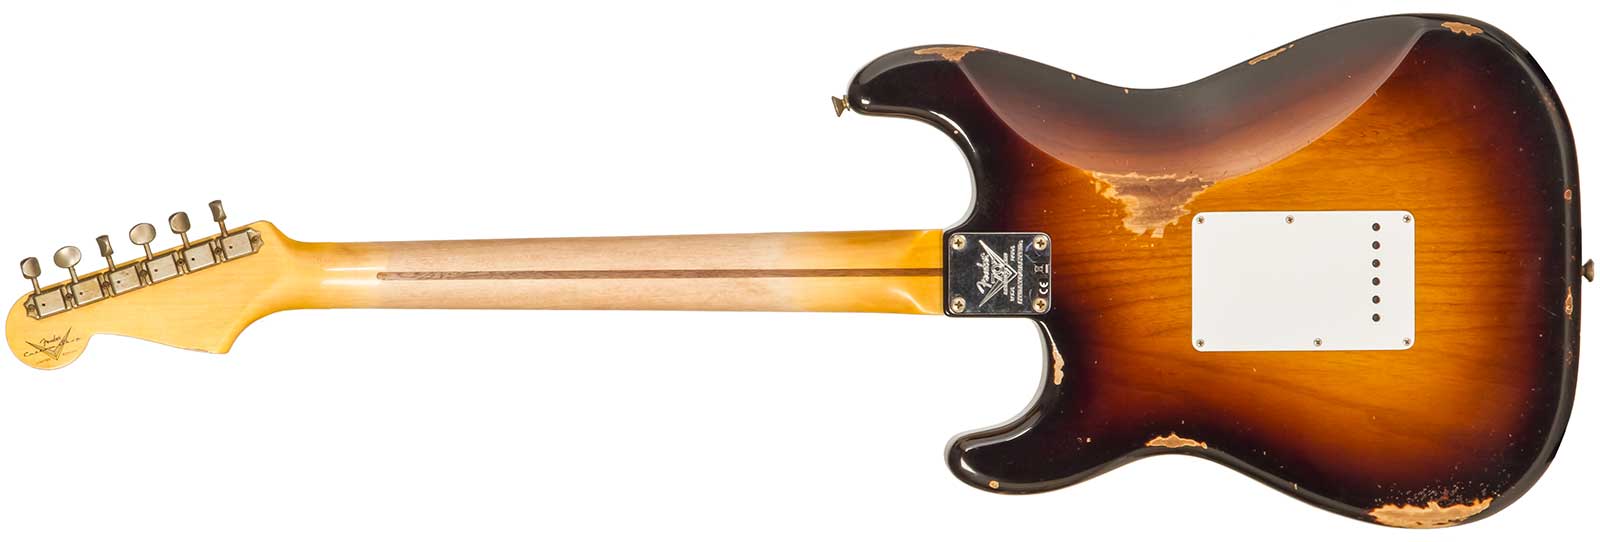 Fender Custom Shop Strat 1954 70th Anniv. 3s Trem Mn #xn4316 - Relic Wide Fade 2-color Sunburst - Guitarra eléctrica con forma de str. - Variation 1